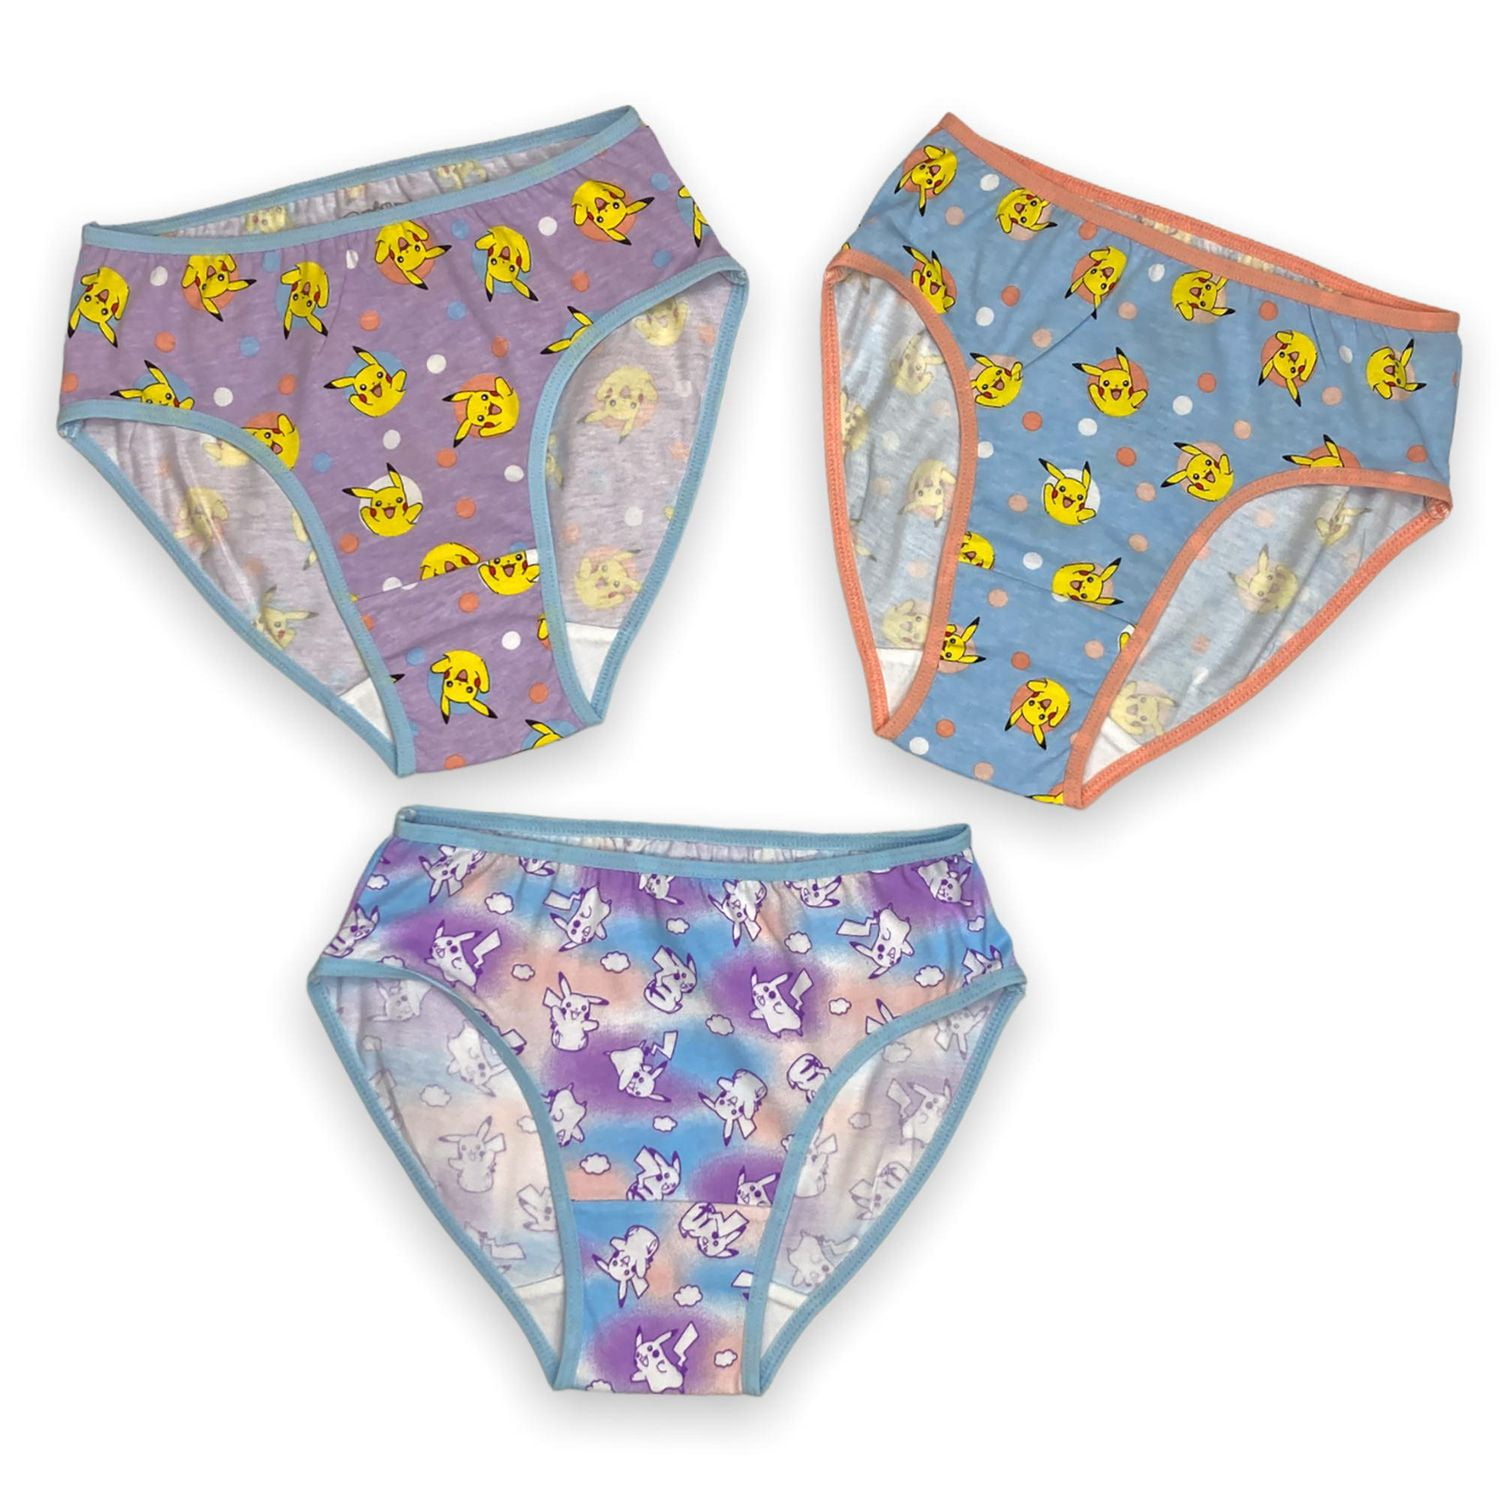 Pack of 2 Women's Girl Brief /underwear for girls /panty for girls